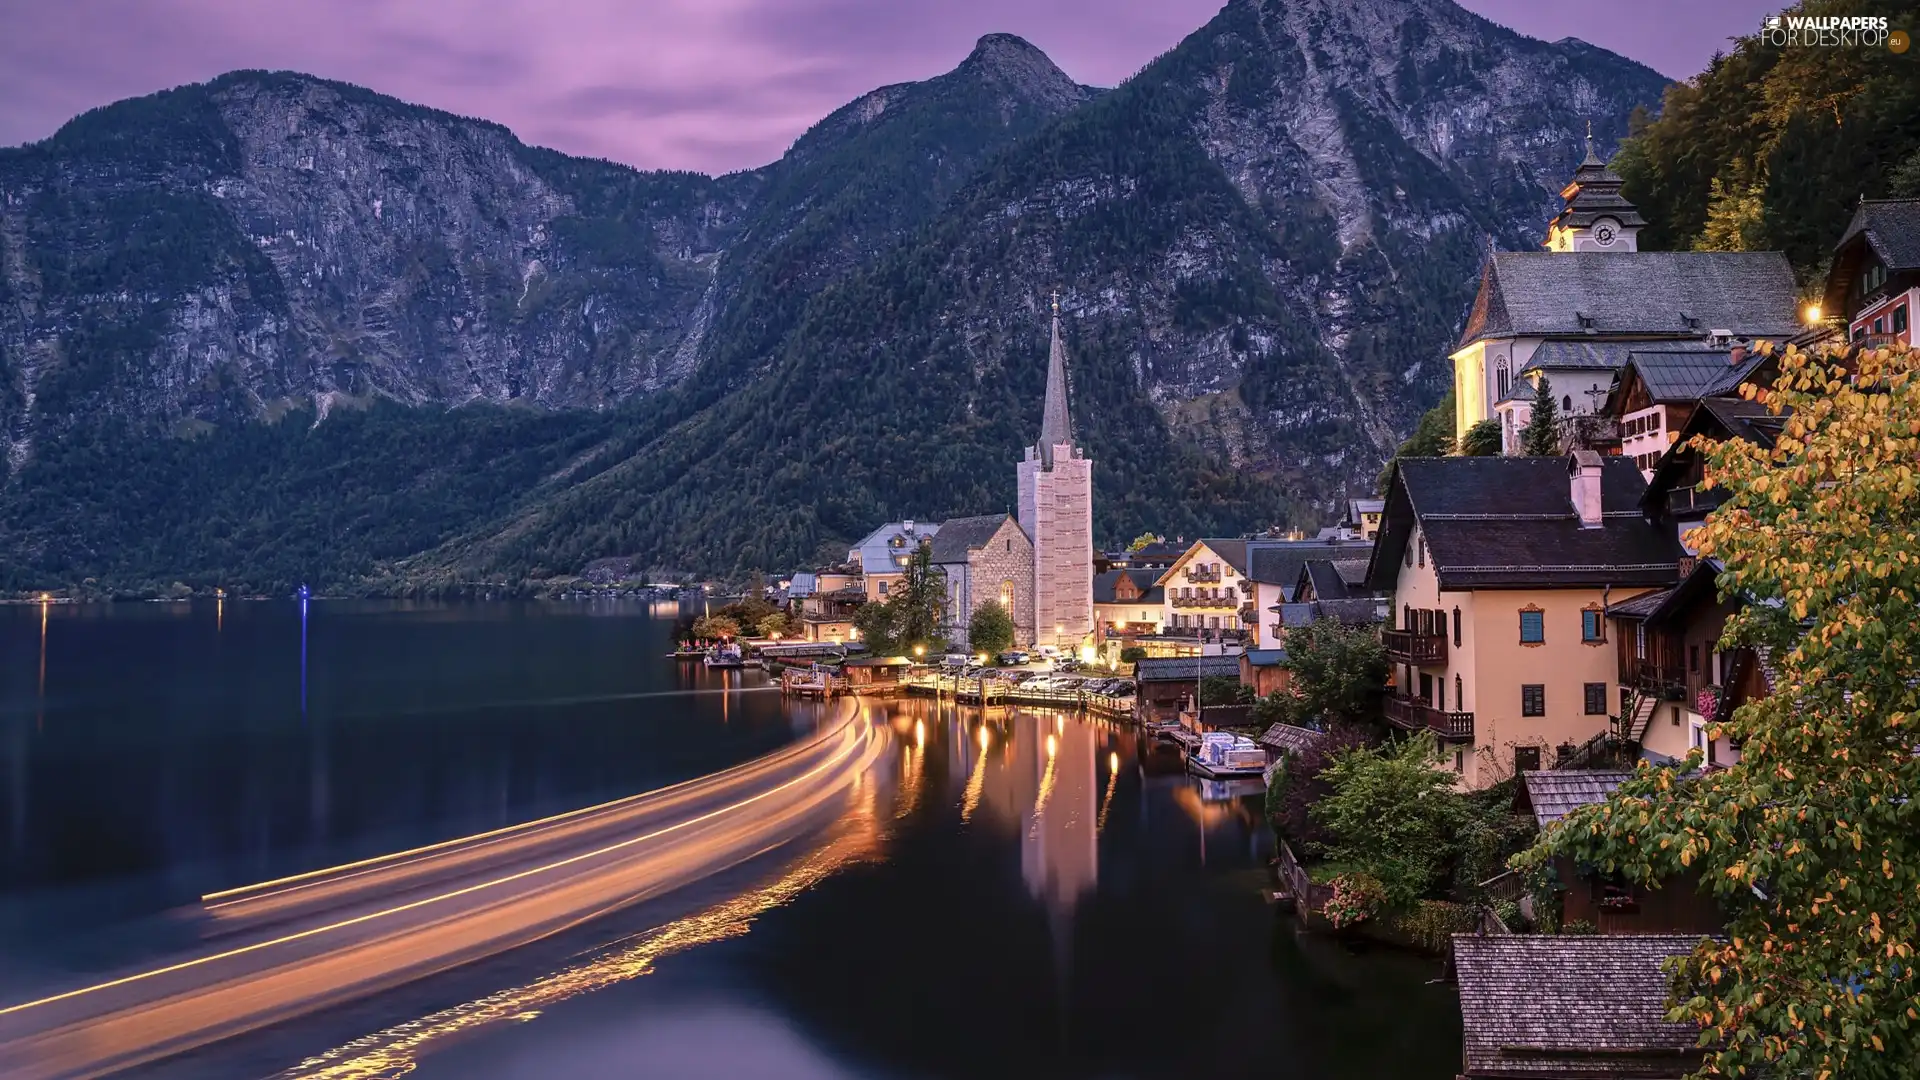 Salzburg Slate Alps, Hallstatt, Houses, Mountains, Austria, Hallstattersee Lake, light